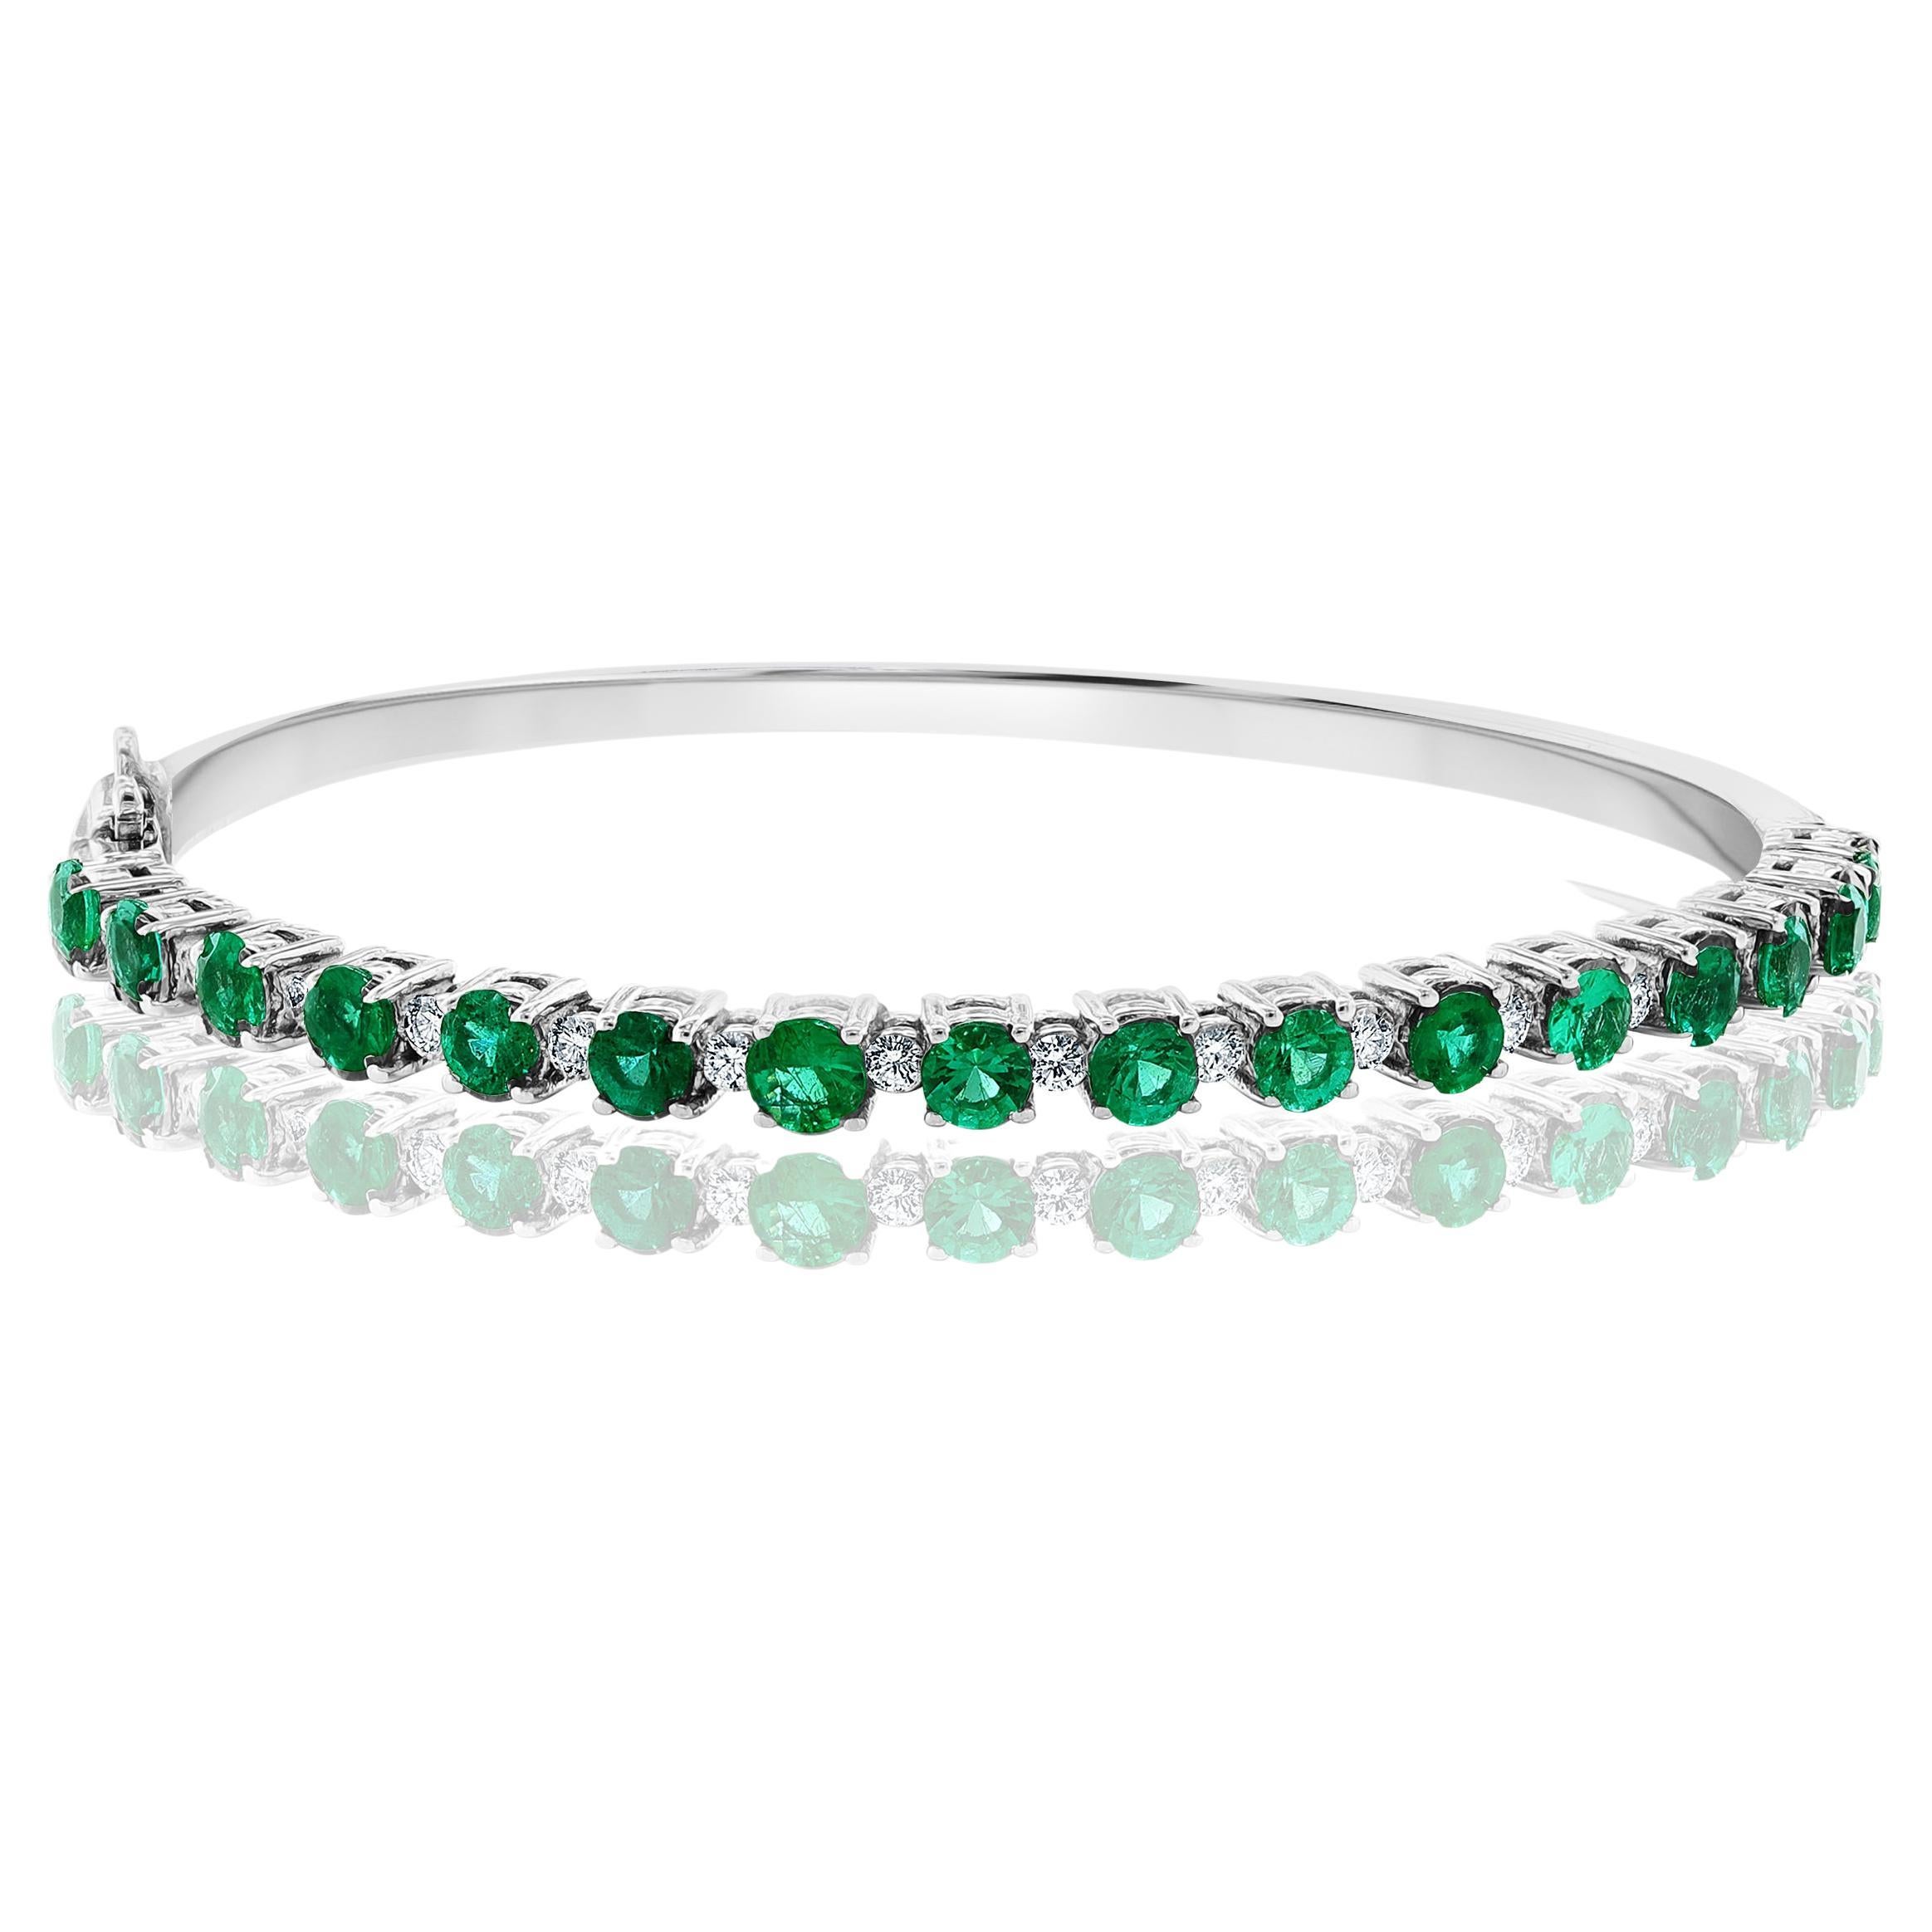 2.33 Carat Emerald and Diamond Bangle Bracelet in 14 K White Gold For Sale